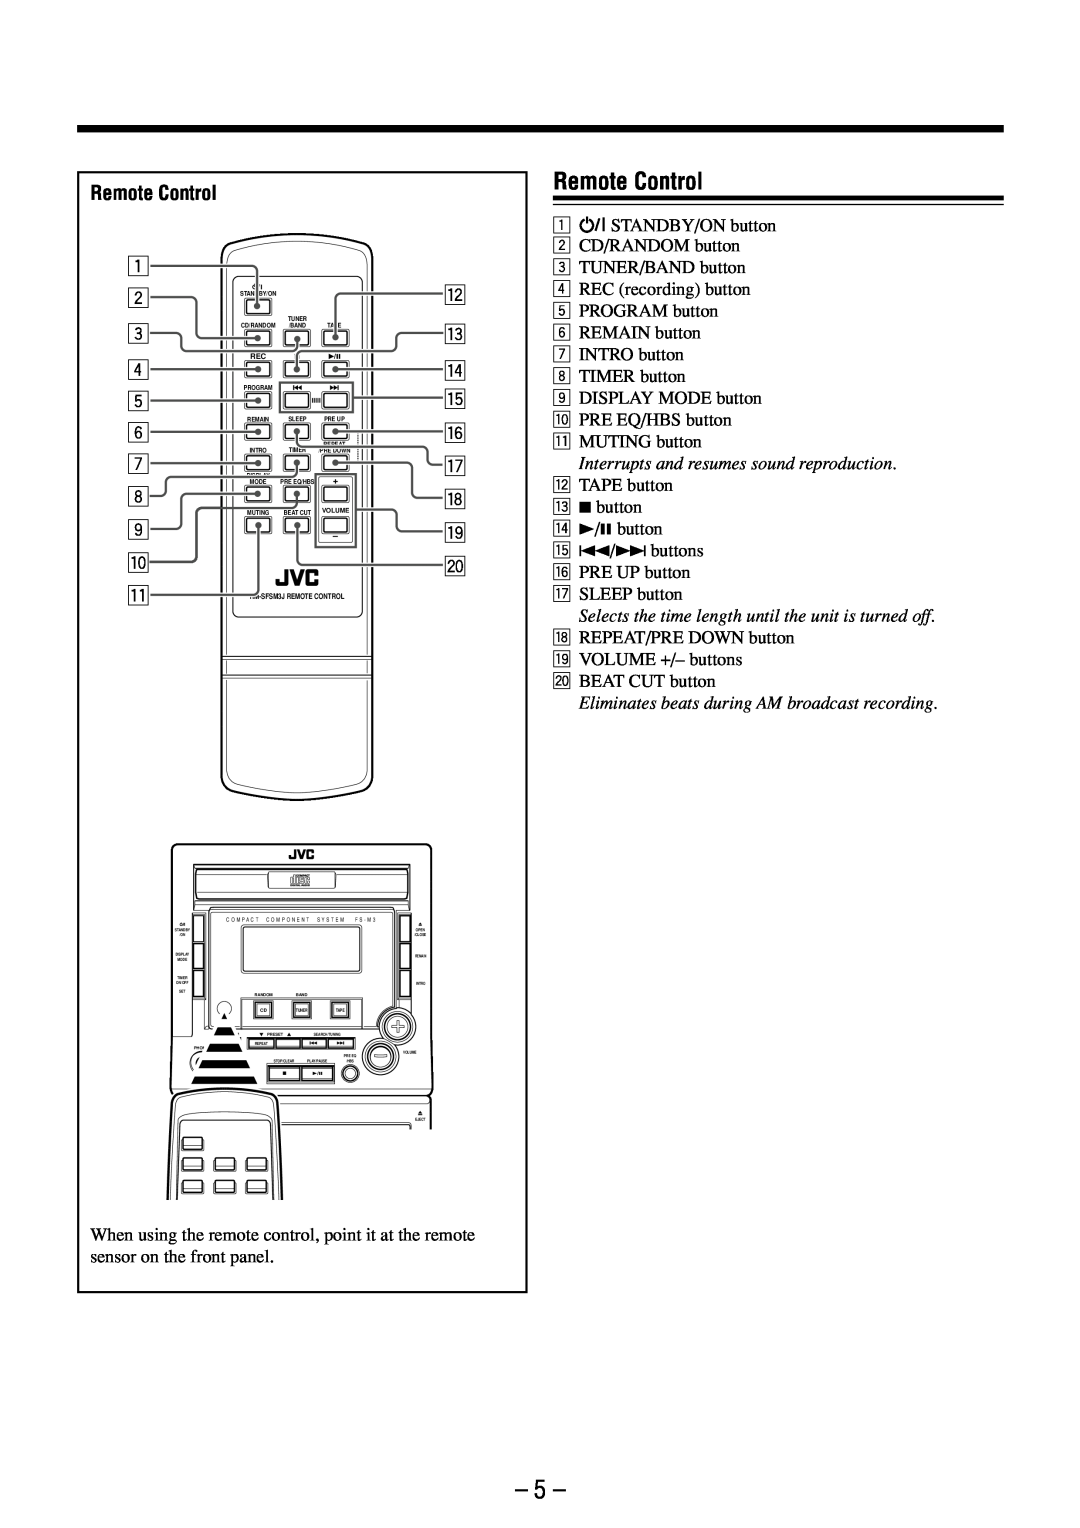 JVC FS-M3 manual Remote Control 